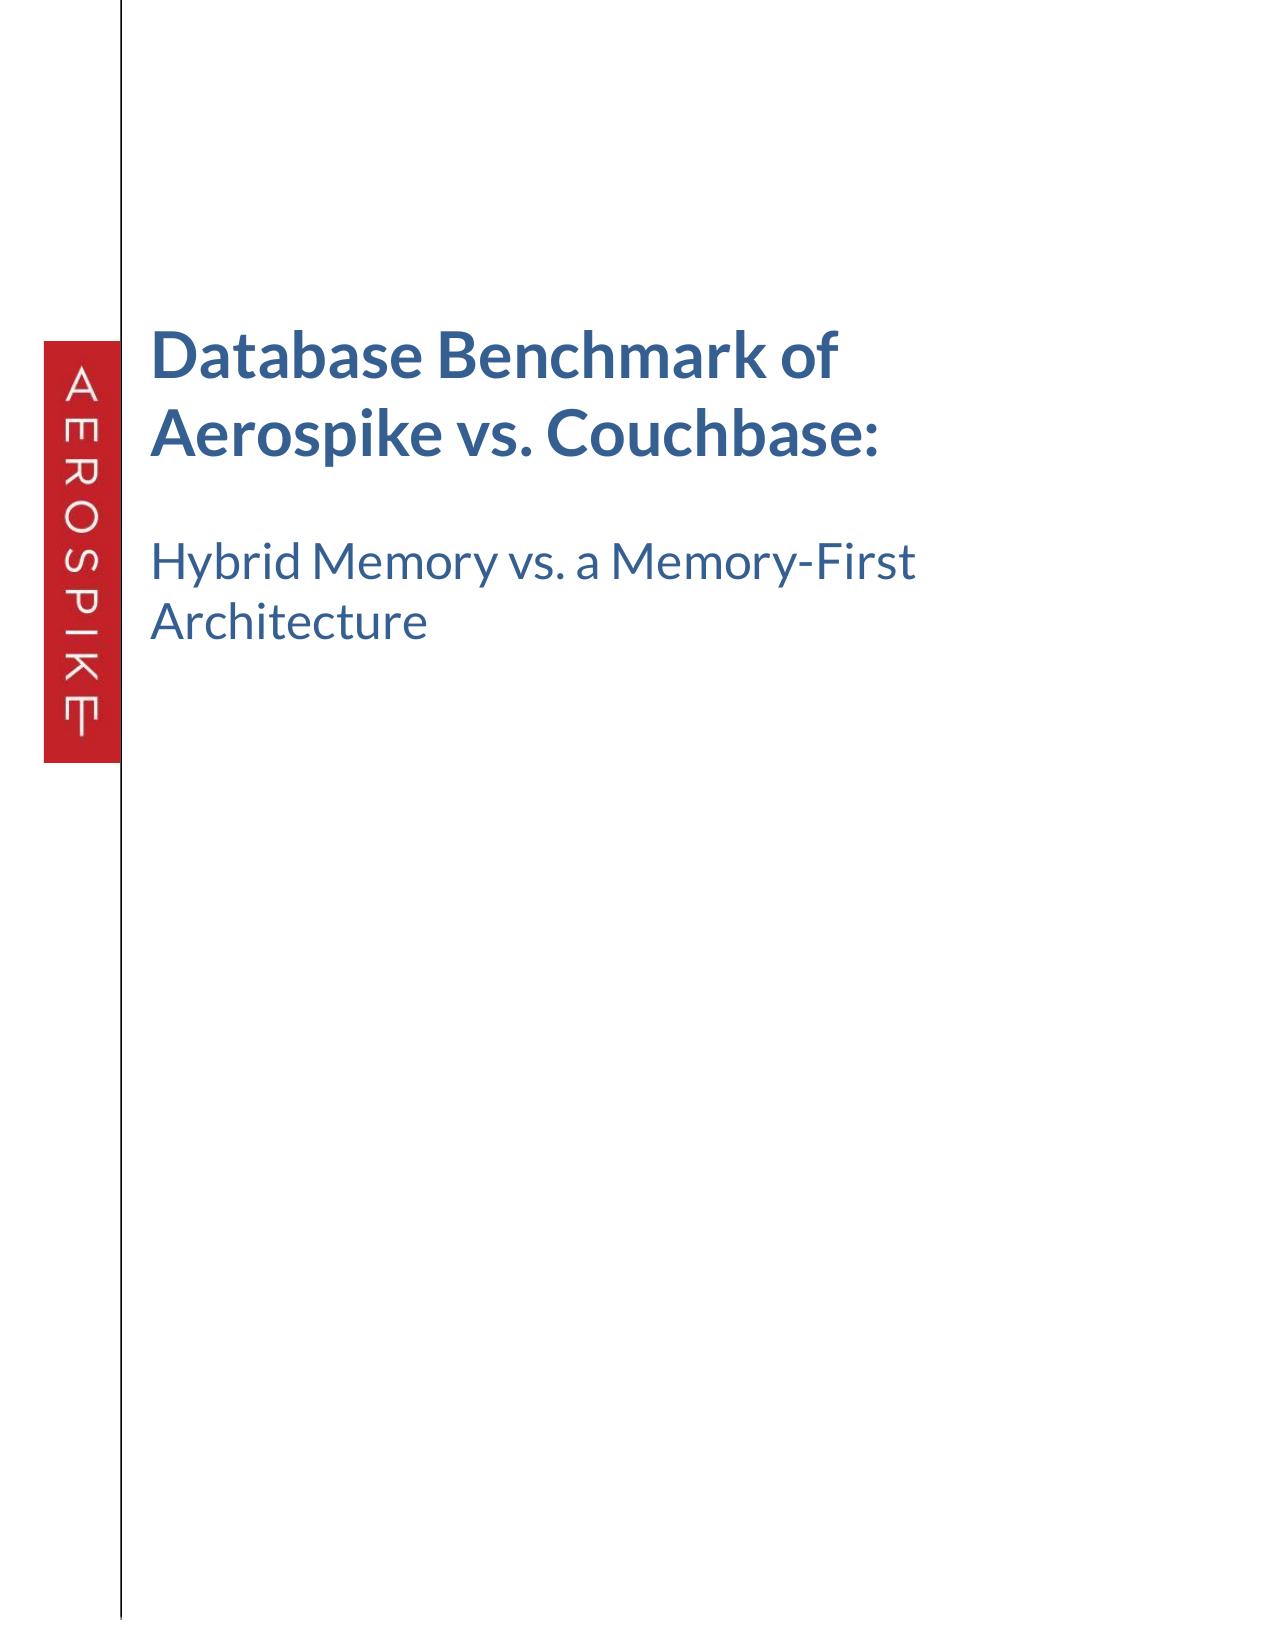 Database Benchmark of Aerospike versus Couchbase